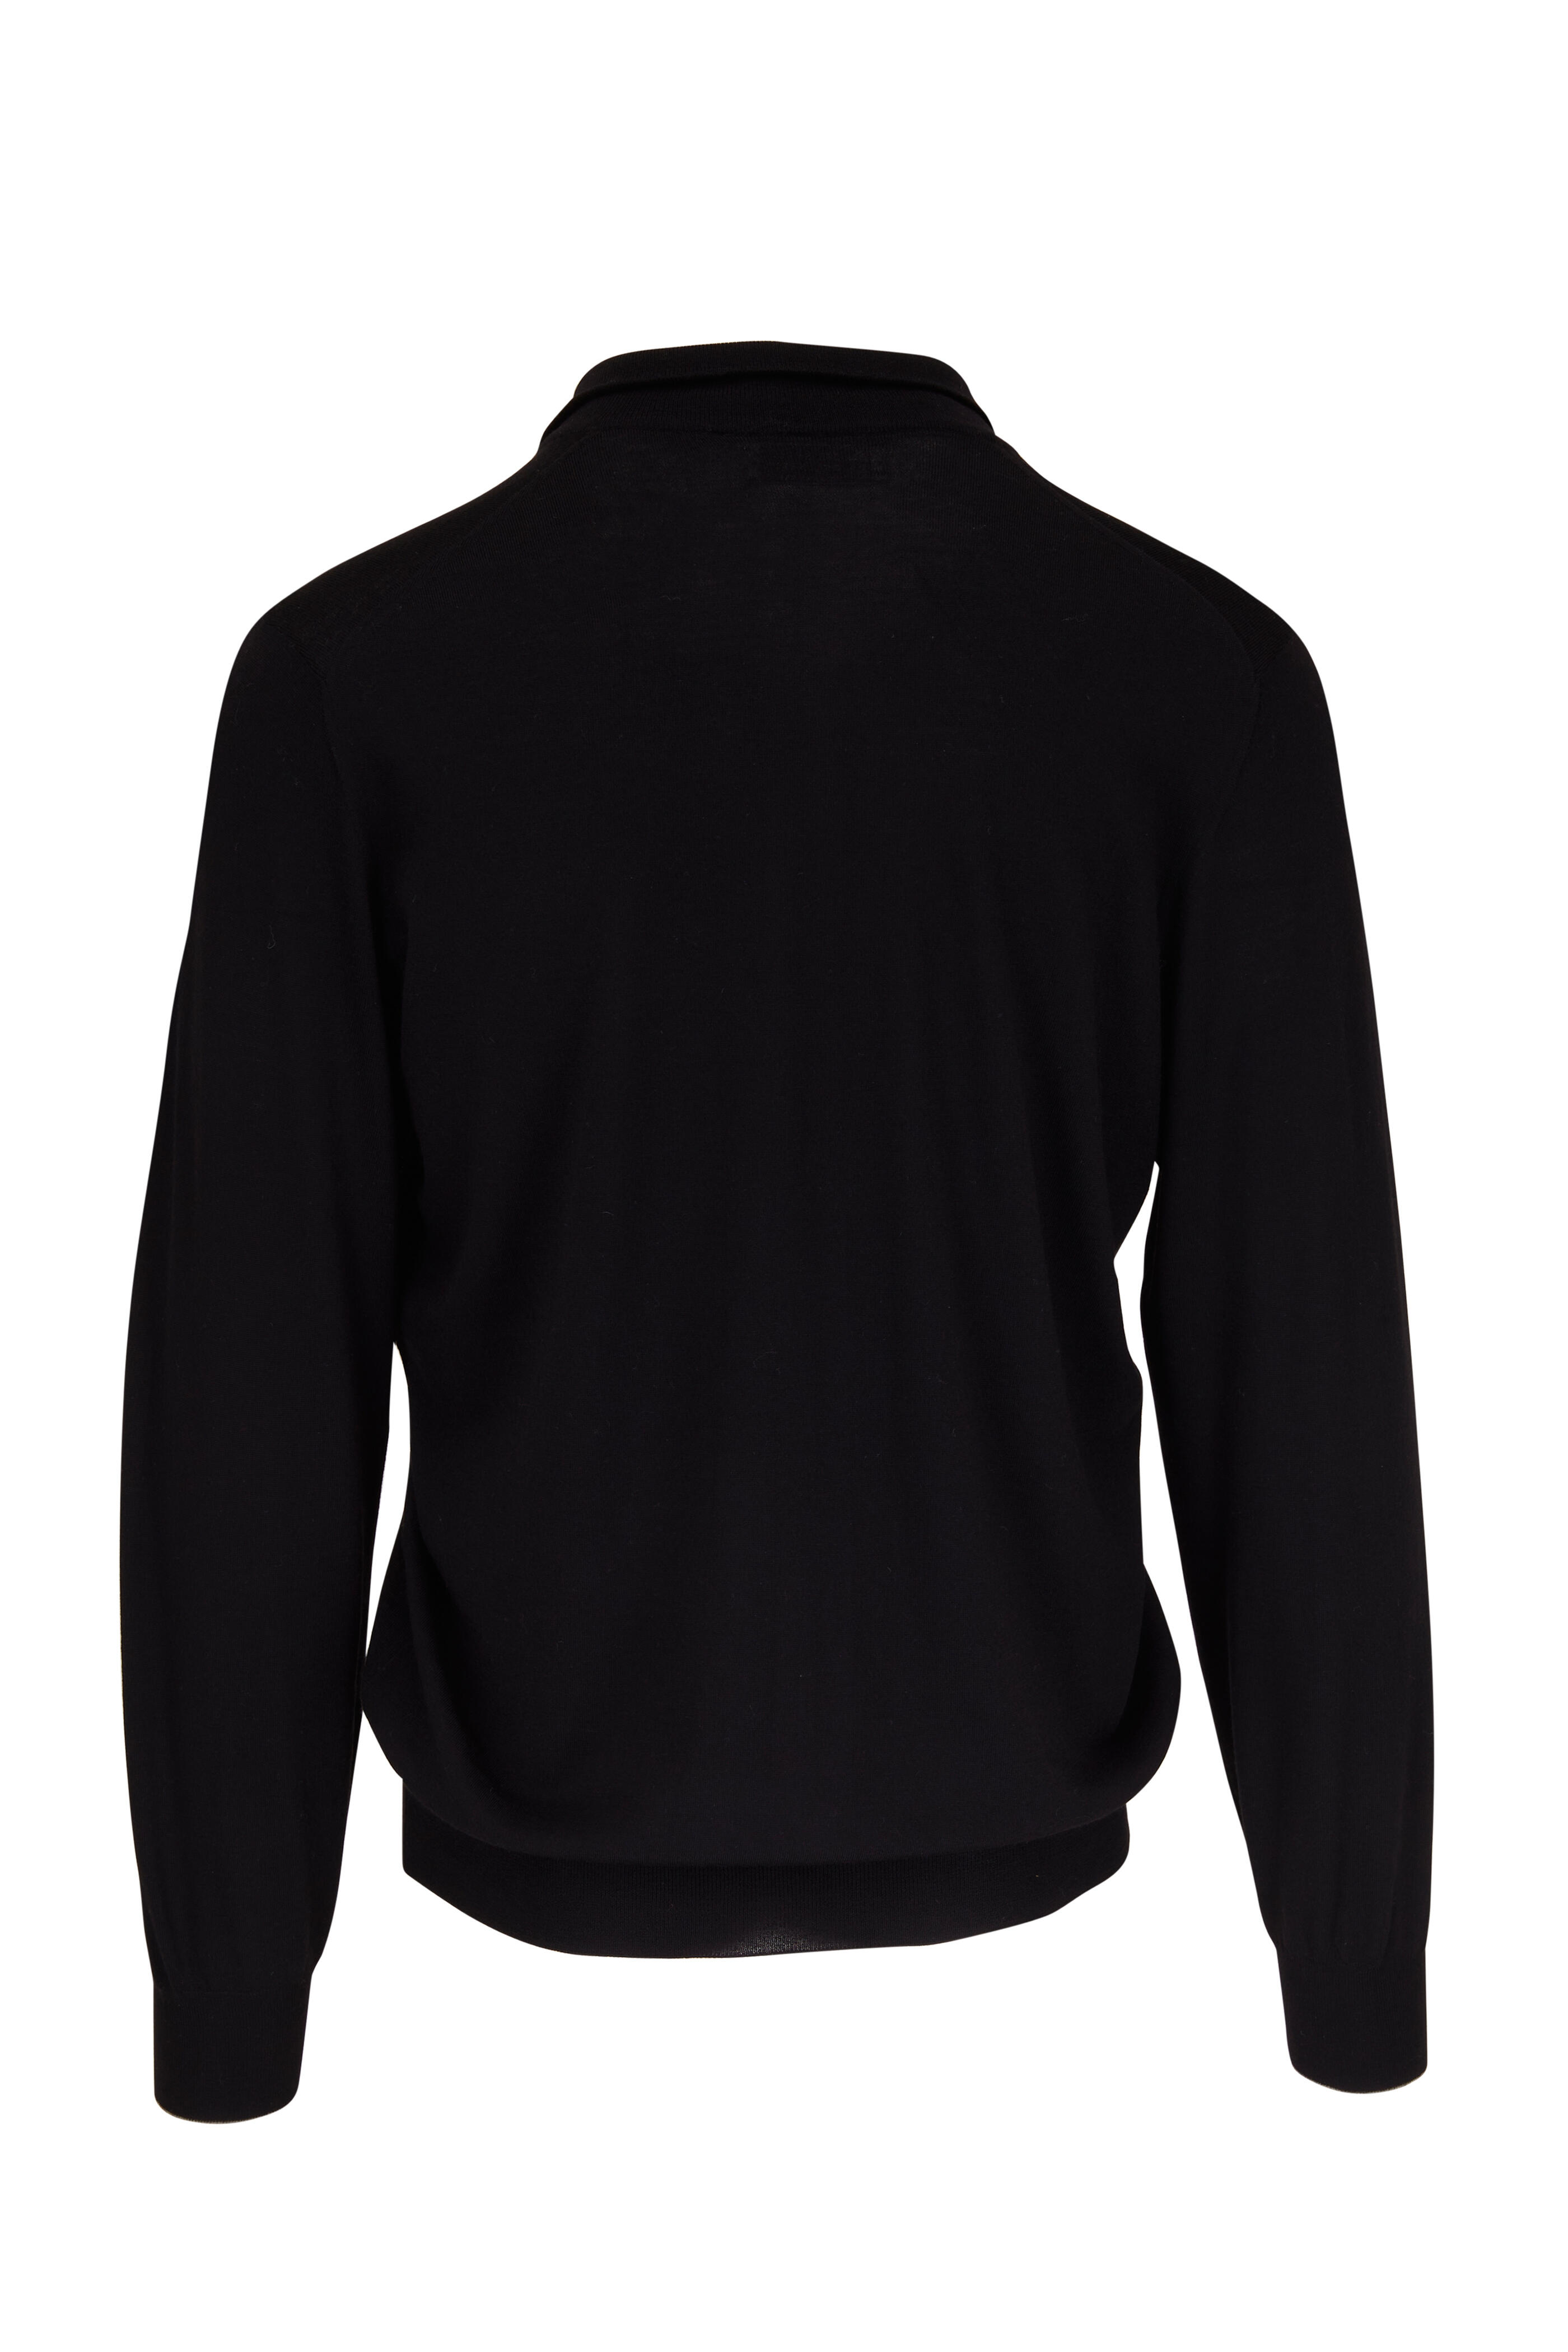 Brunello Cucinelli - Black Wool & Cashmere Full Zip Sweater